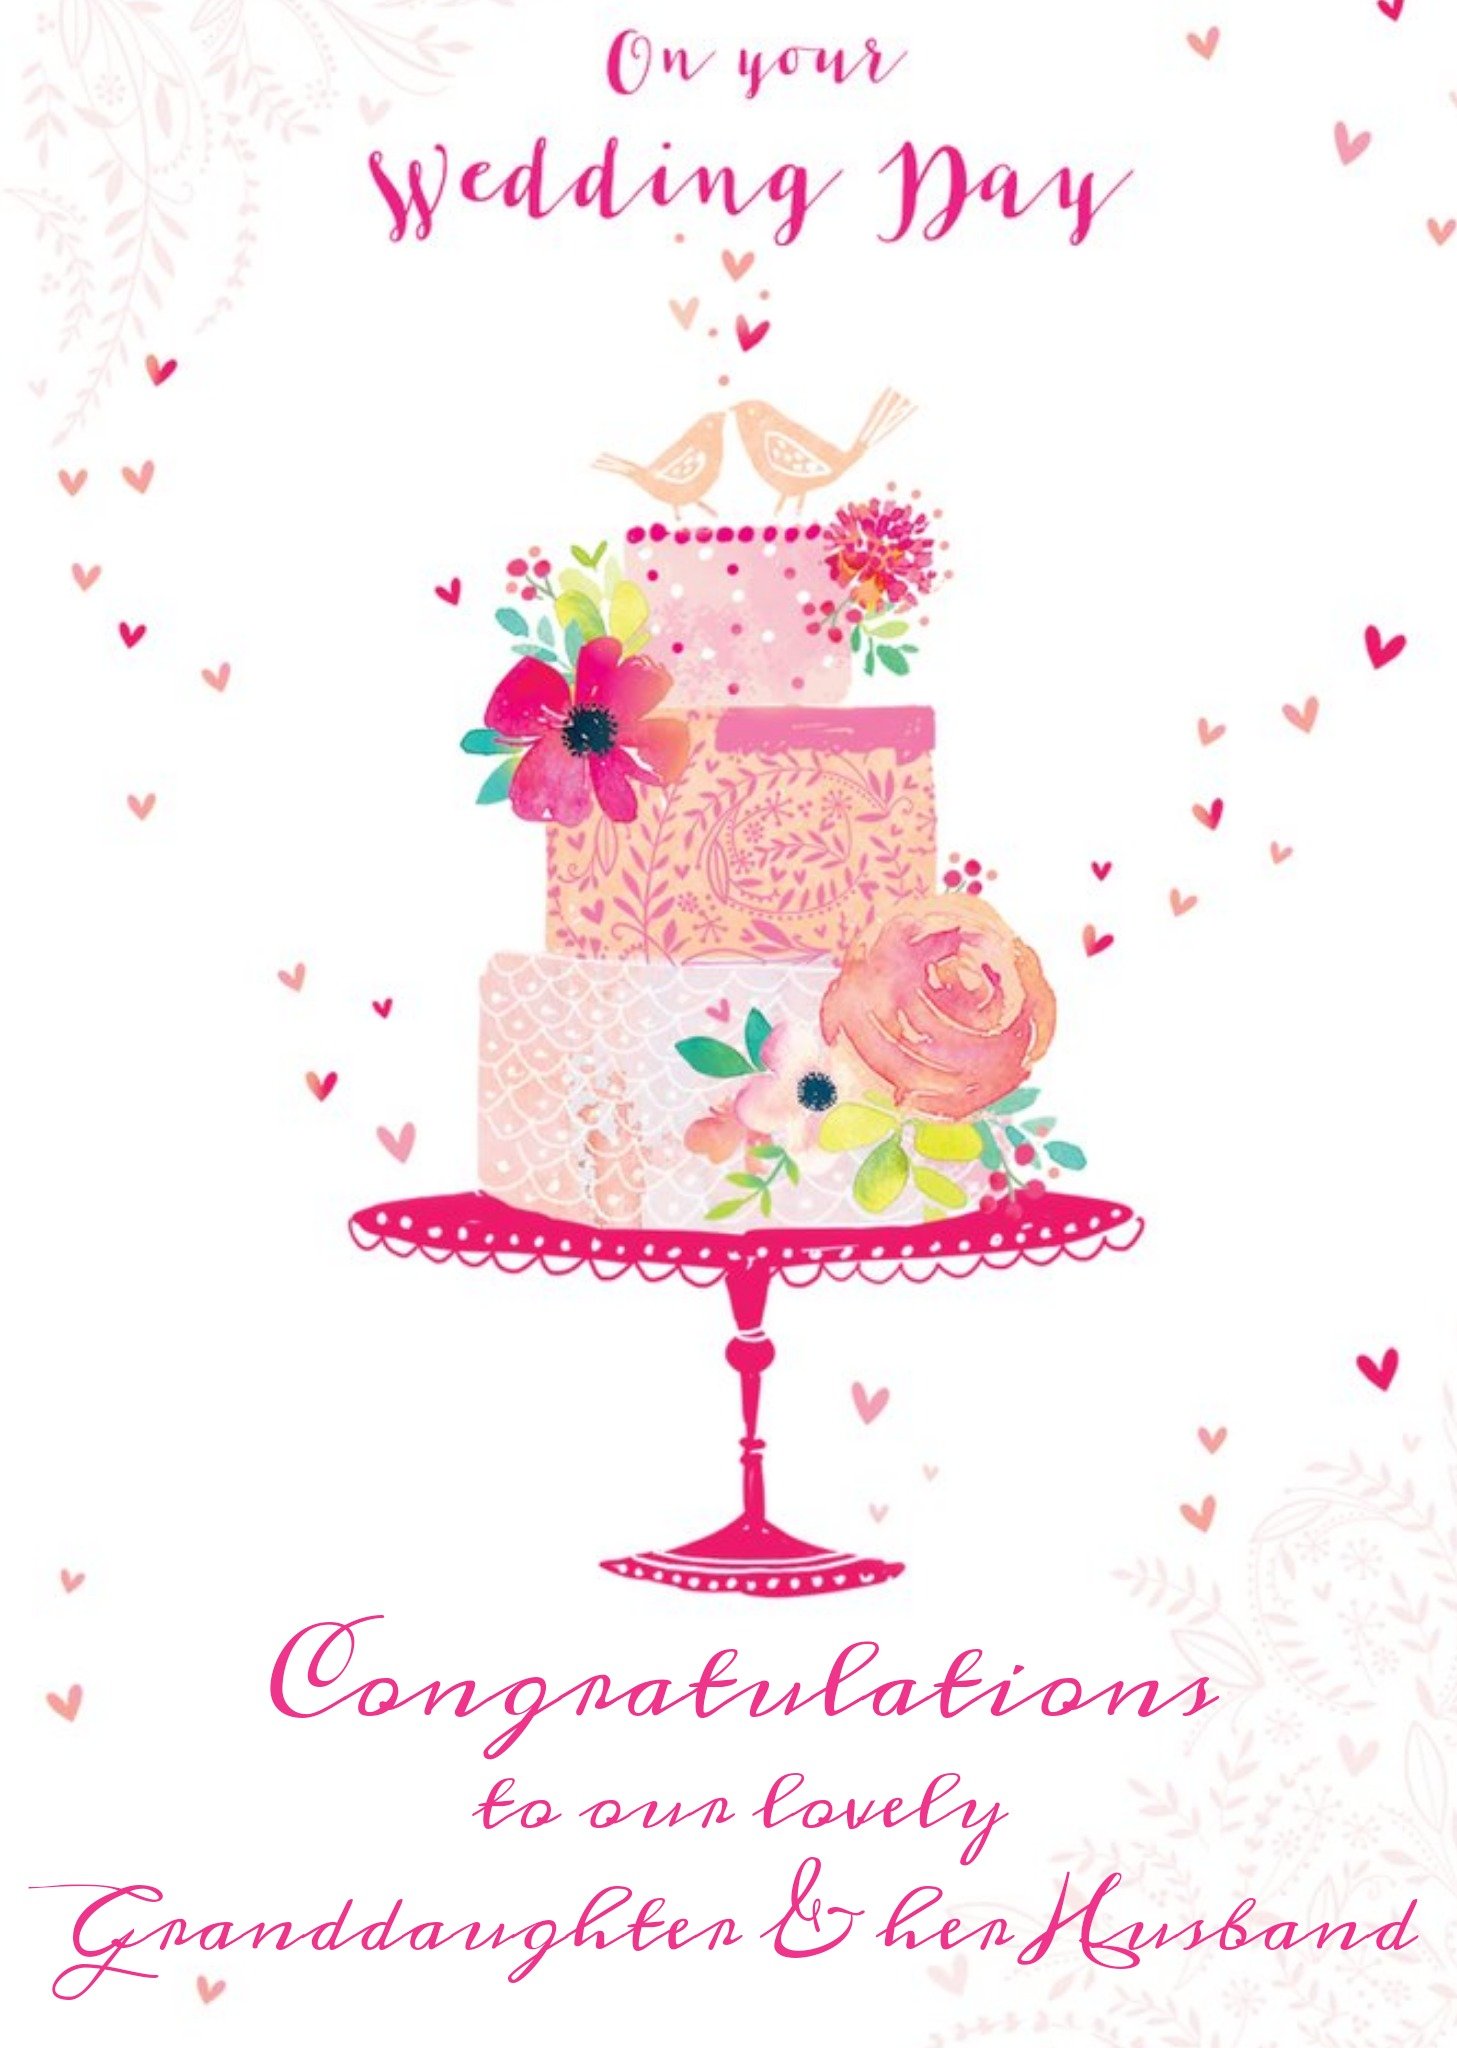 Ling Design Congratulations Granddaughter And Her Husband Wedding Card Ecard